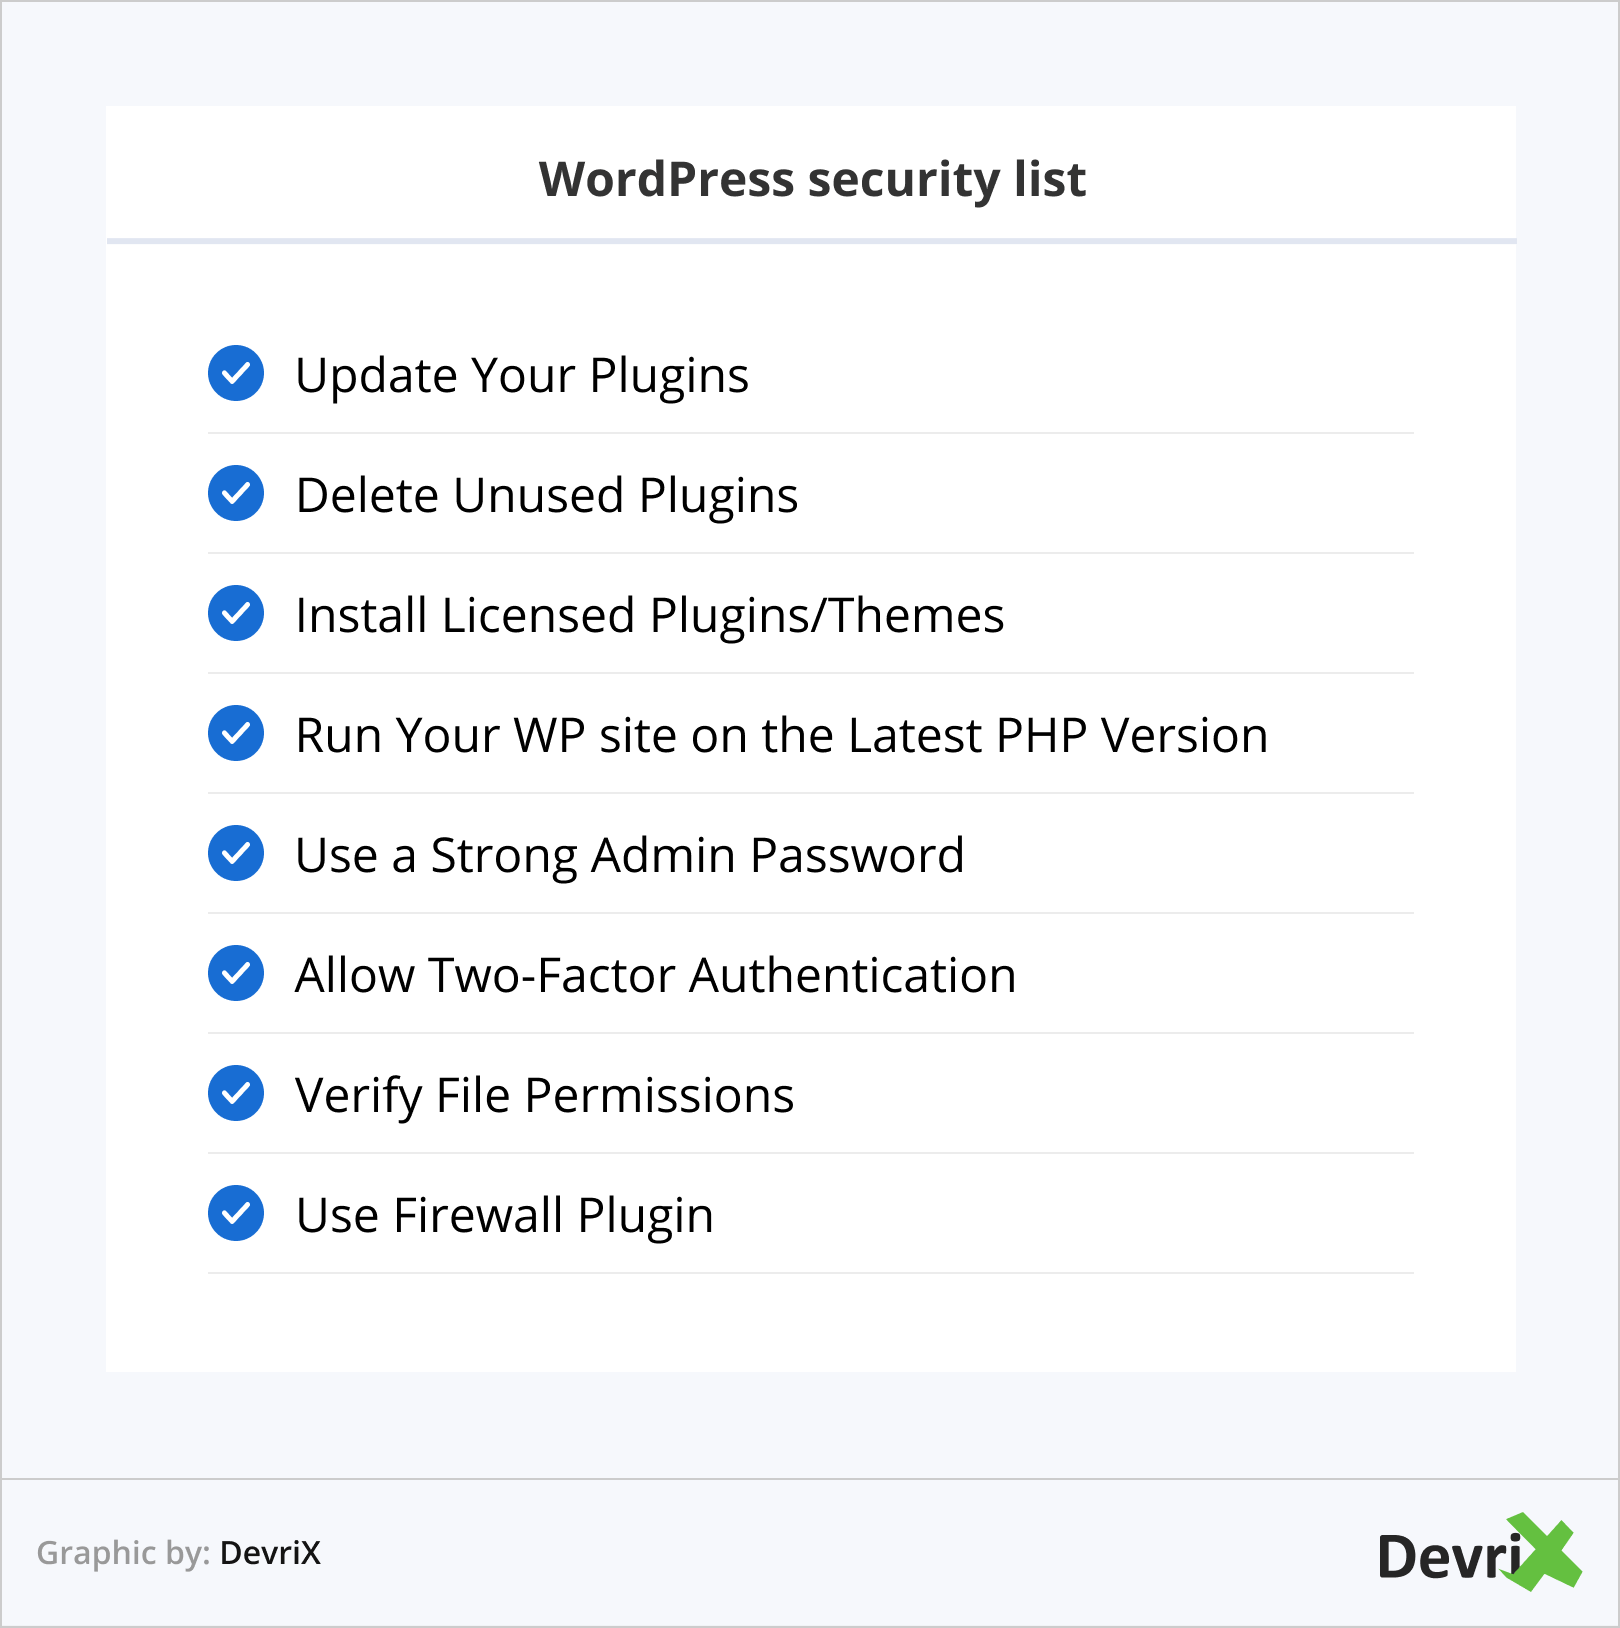 WordPress security list